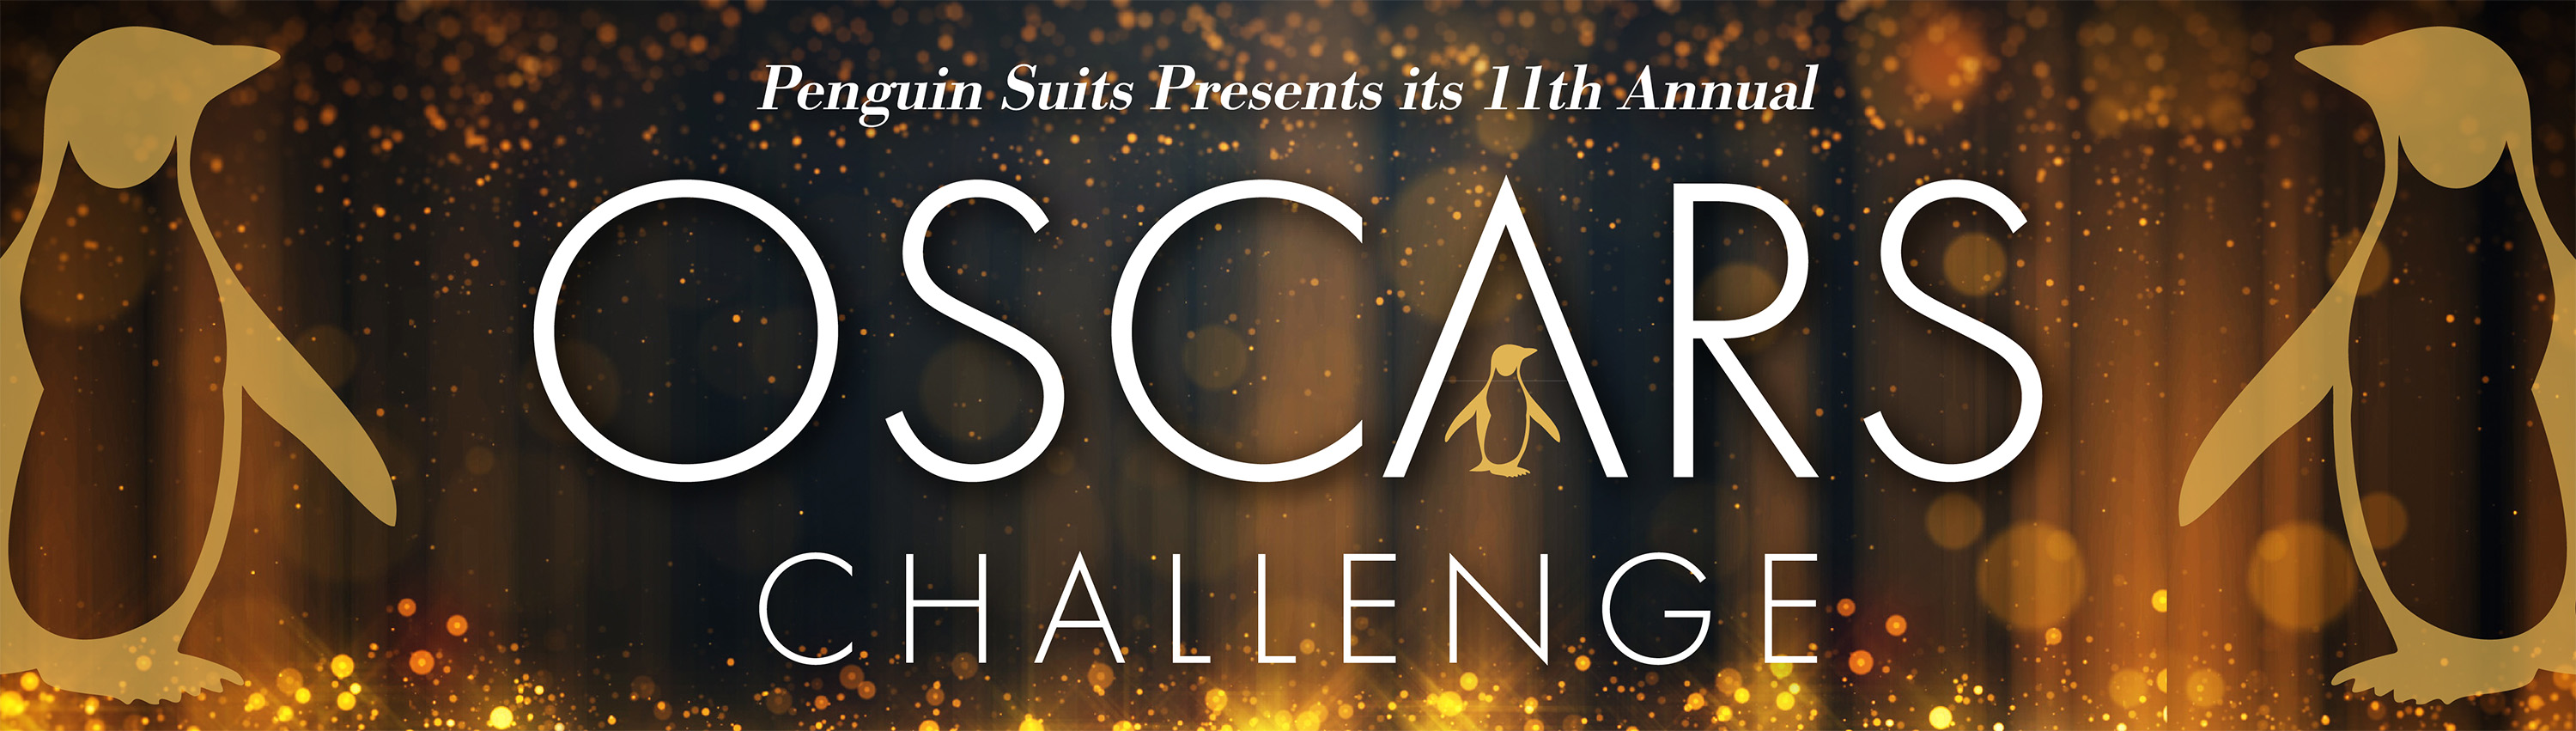 6th annual oscar challenge header